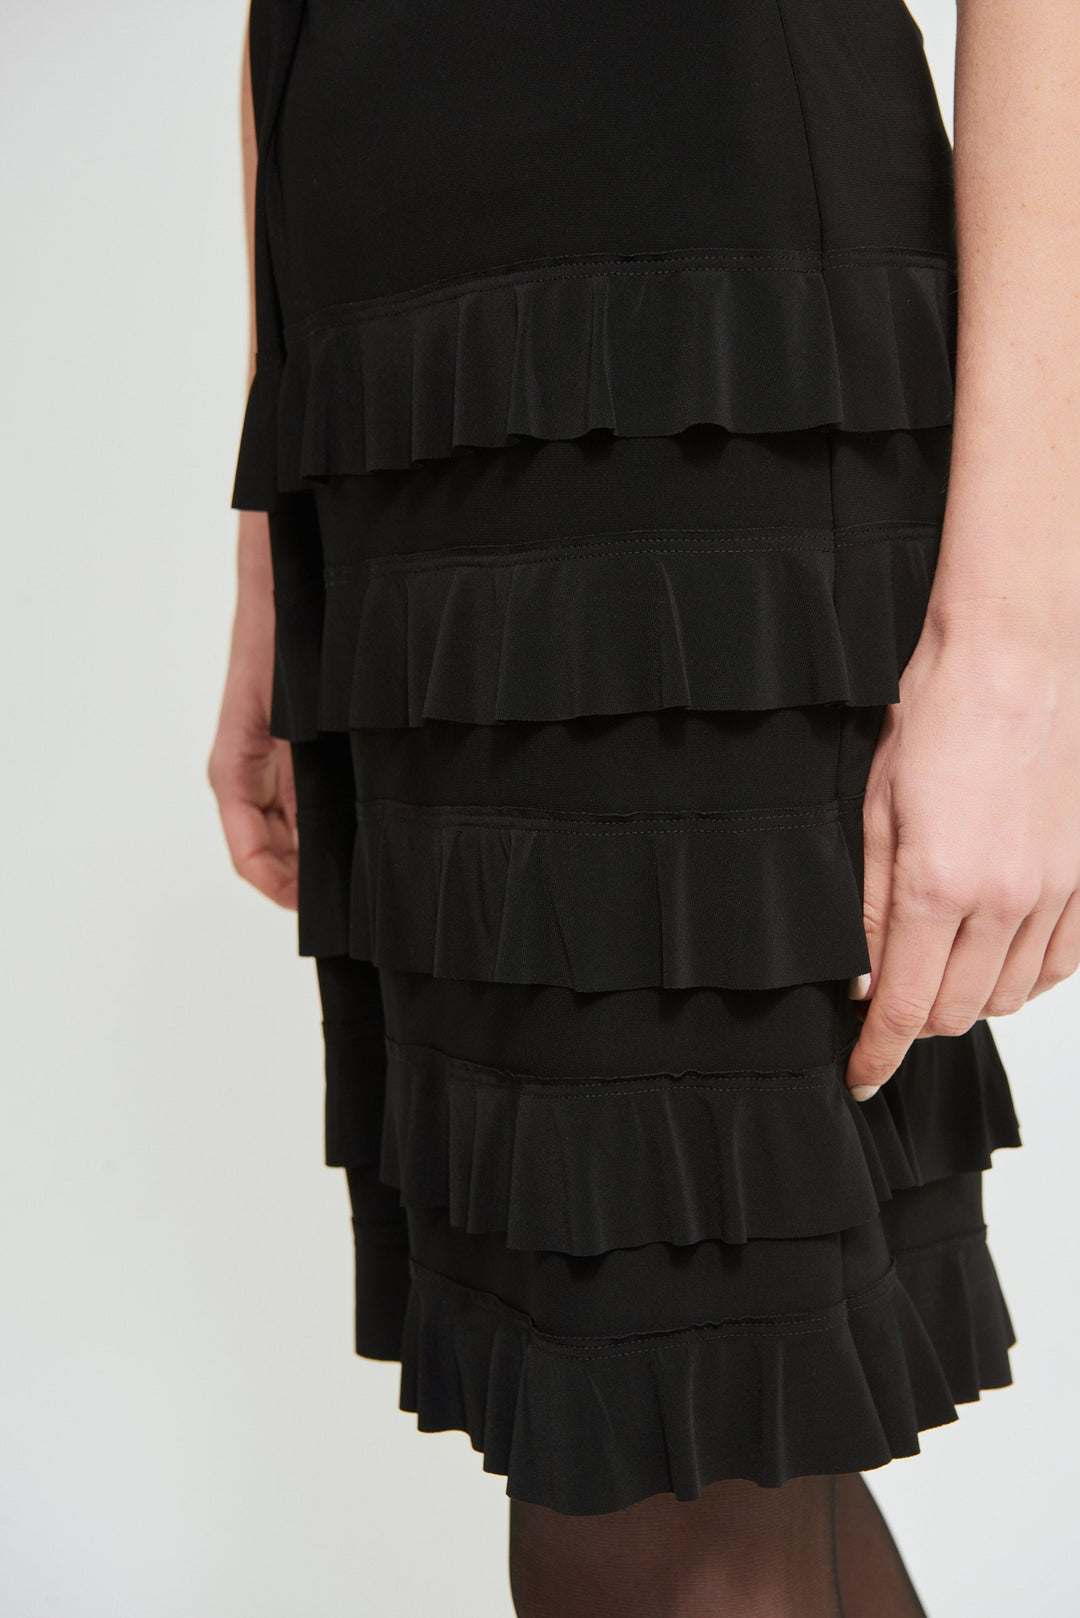 Joseph Ribkoff Skirt Style 213561